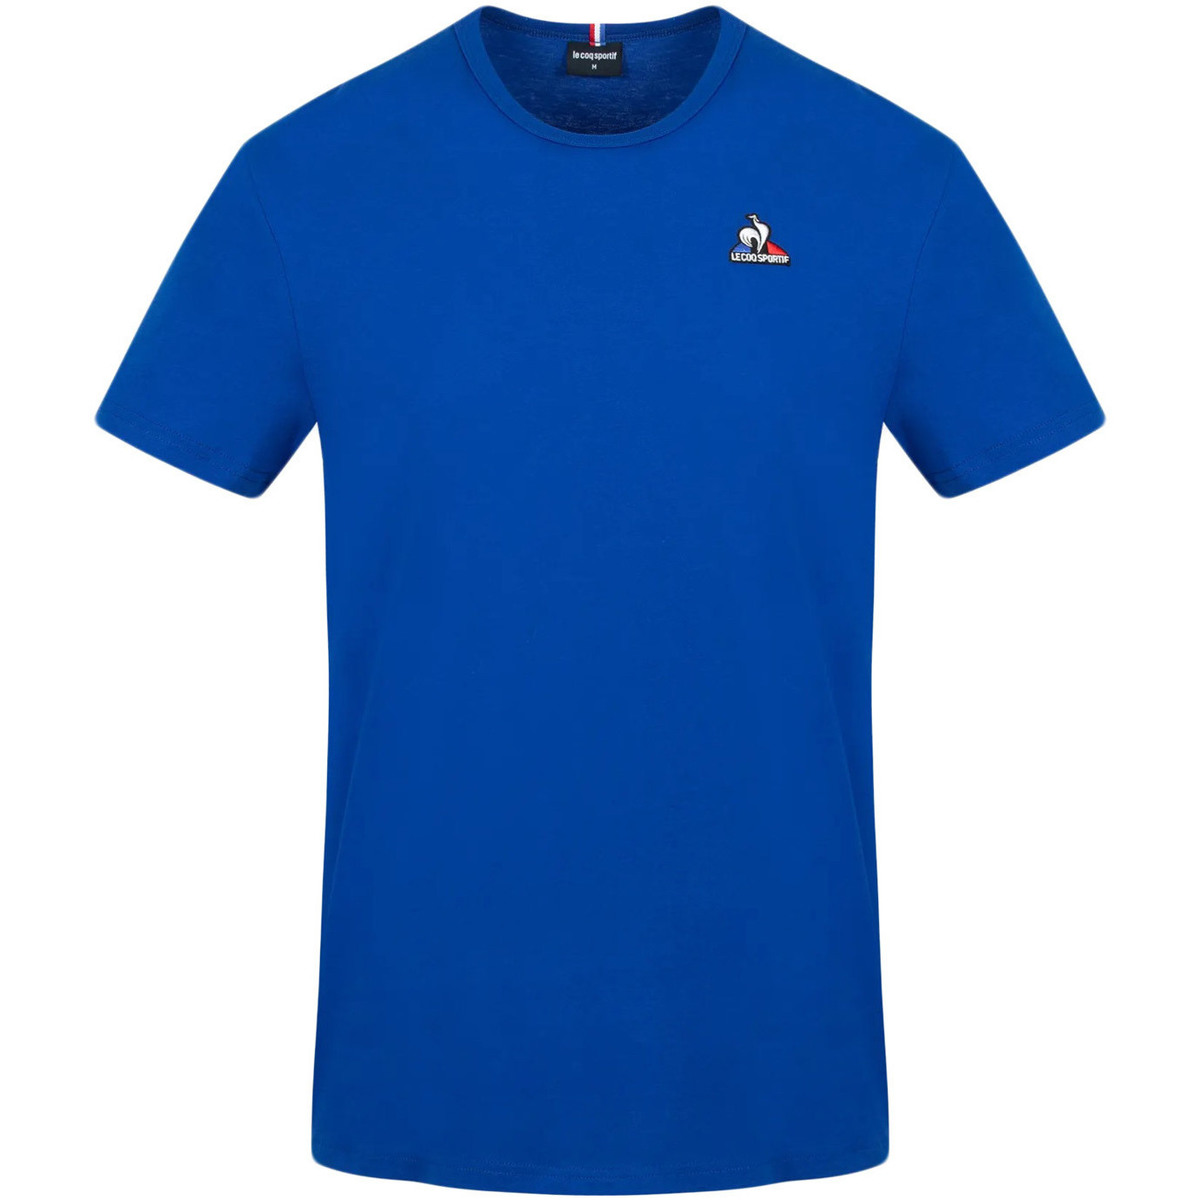 Vêtements Homme Men's Woven Pullover Training Hoodie T-shirt Essentiels Bleu